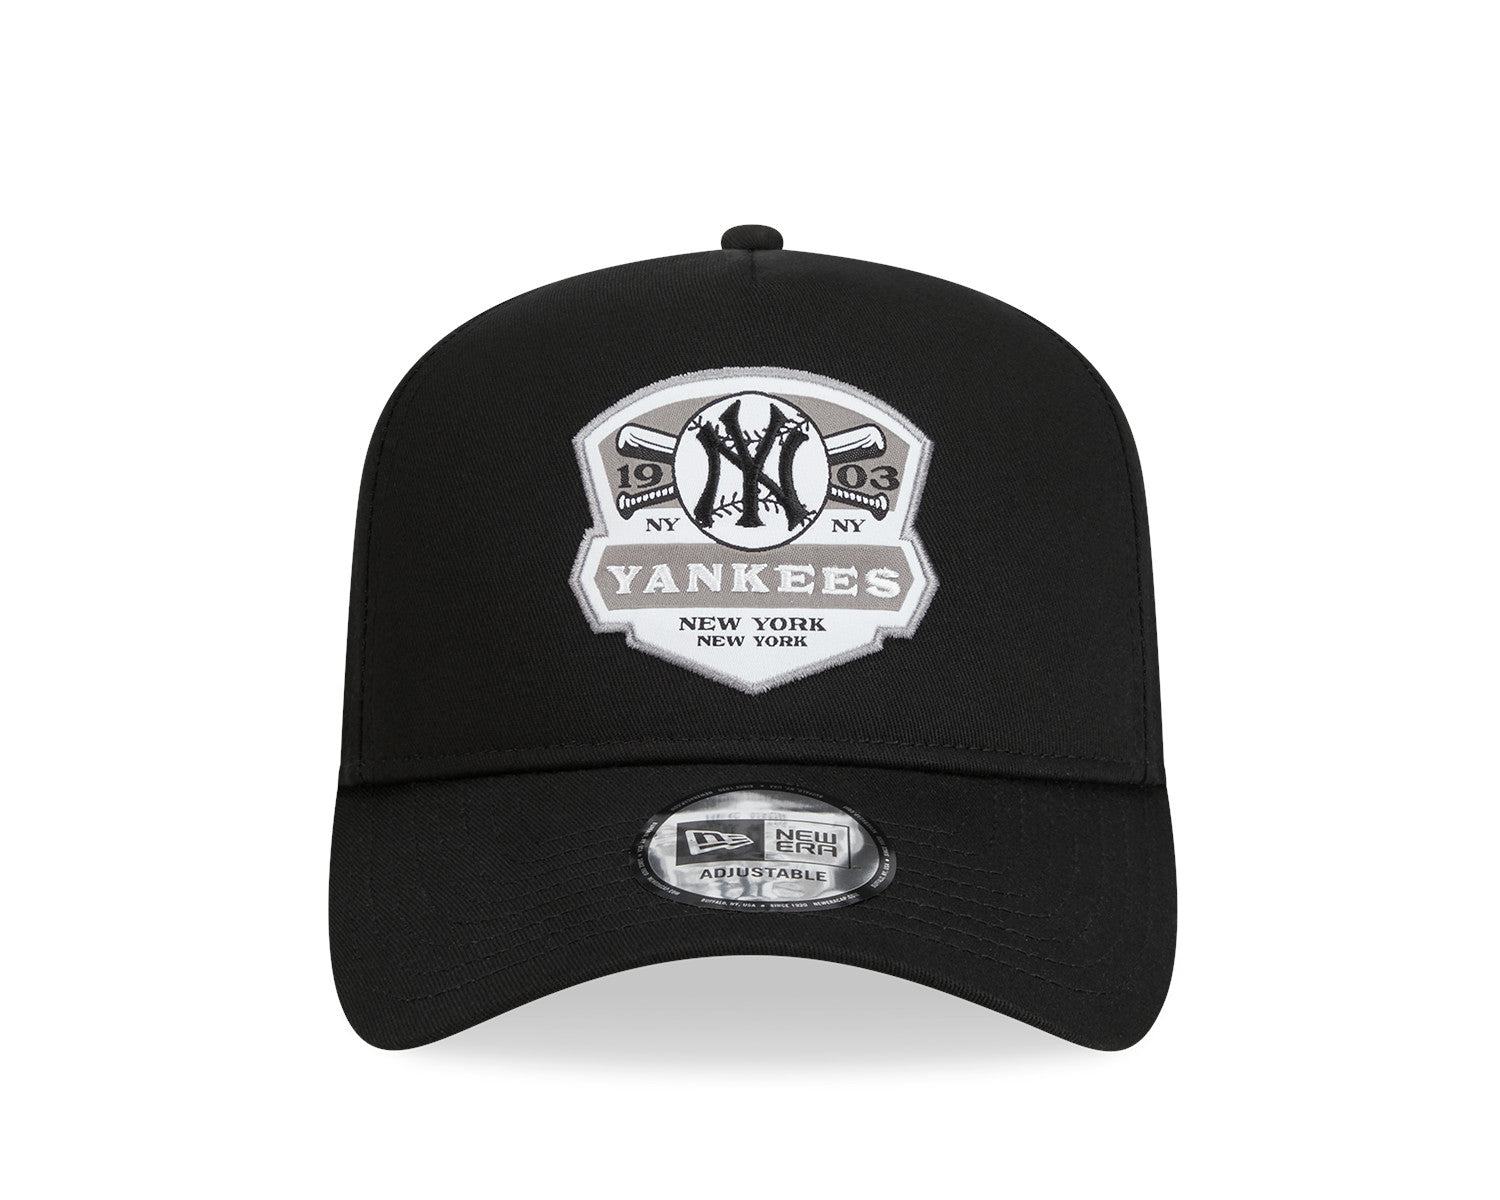 New Era - MLB Patch E-Frame - New York Yankees - Black - Headz Up 